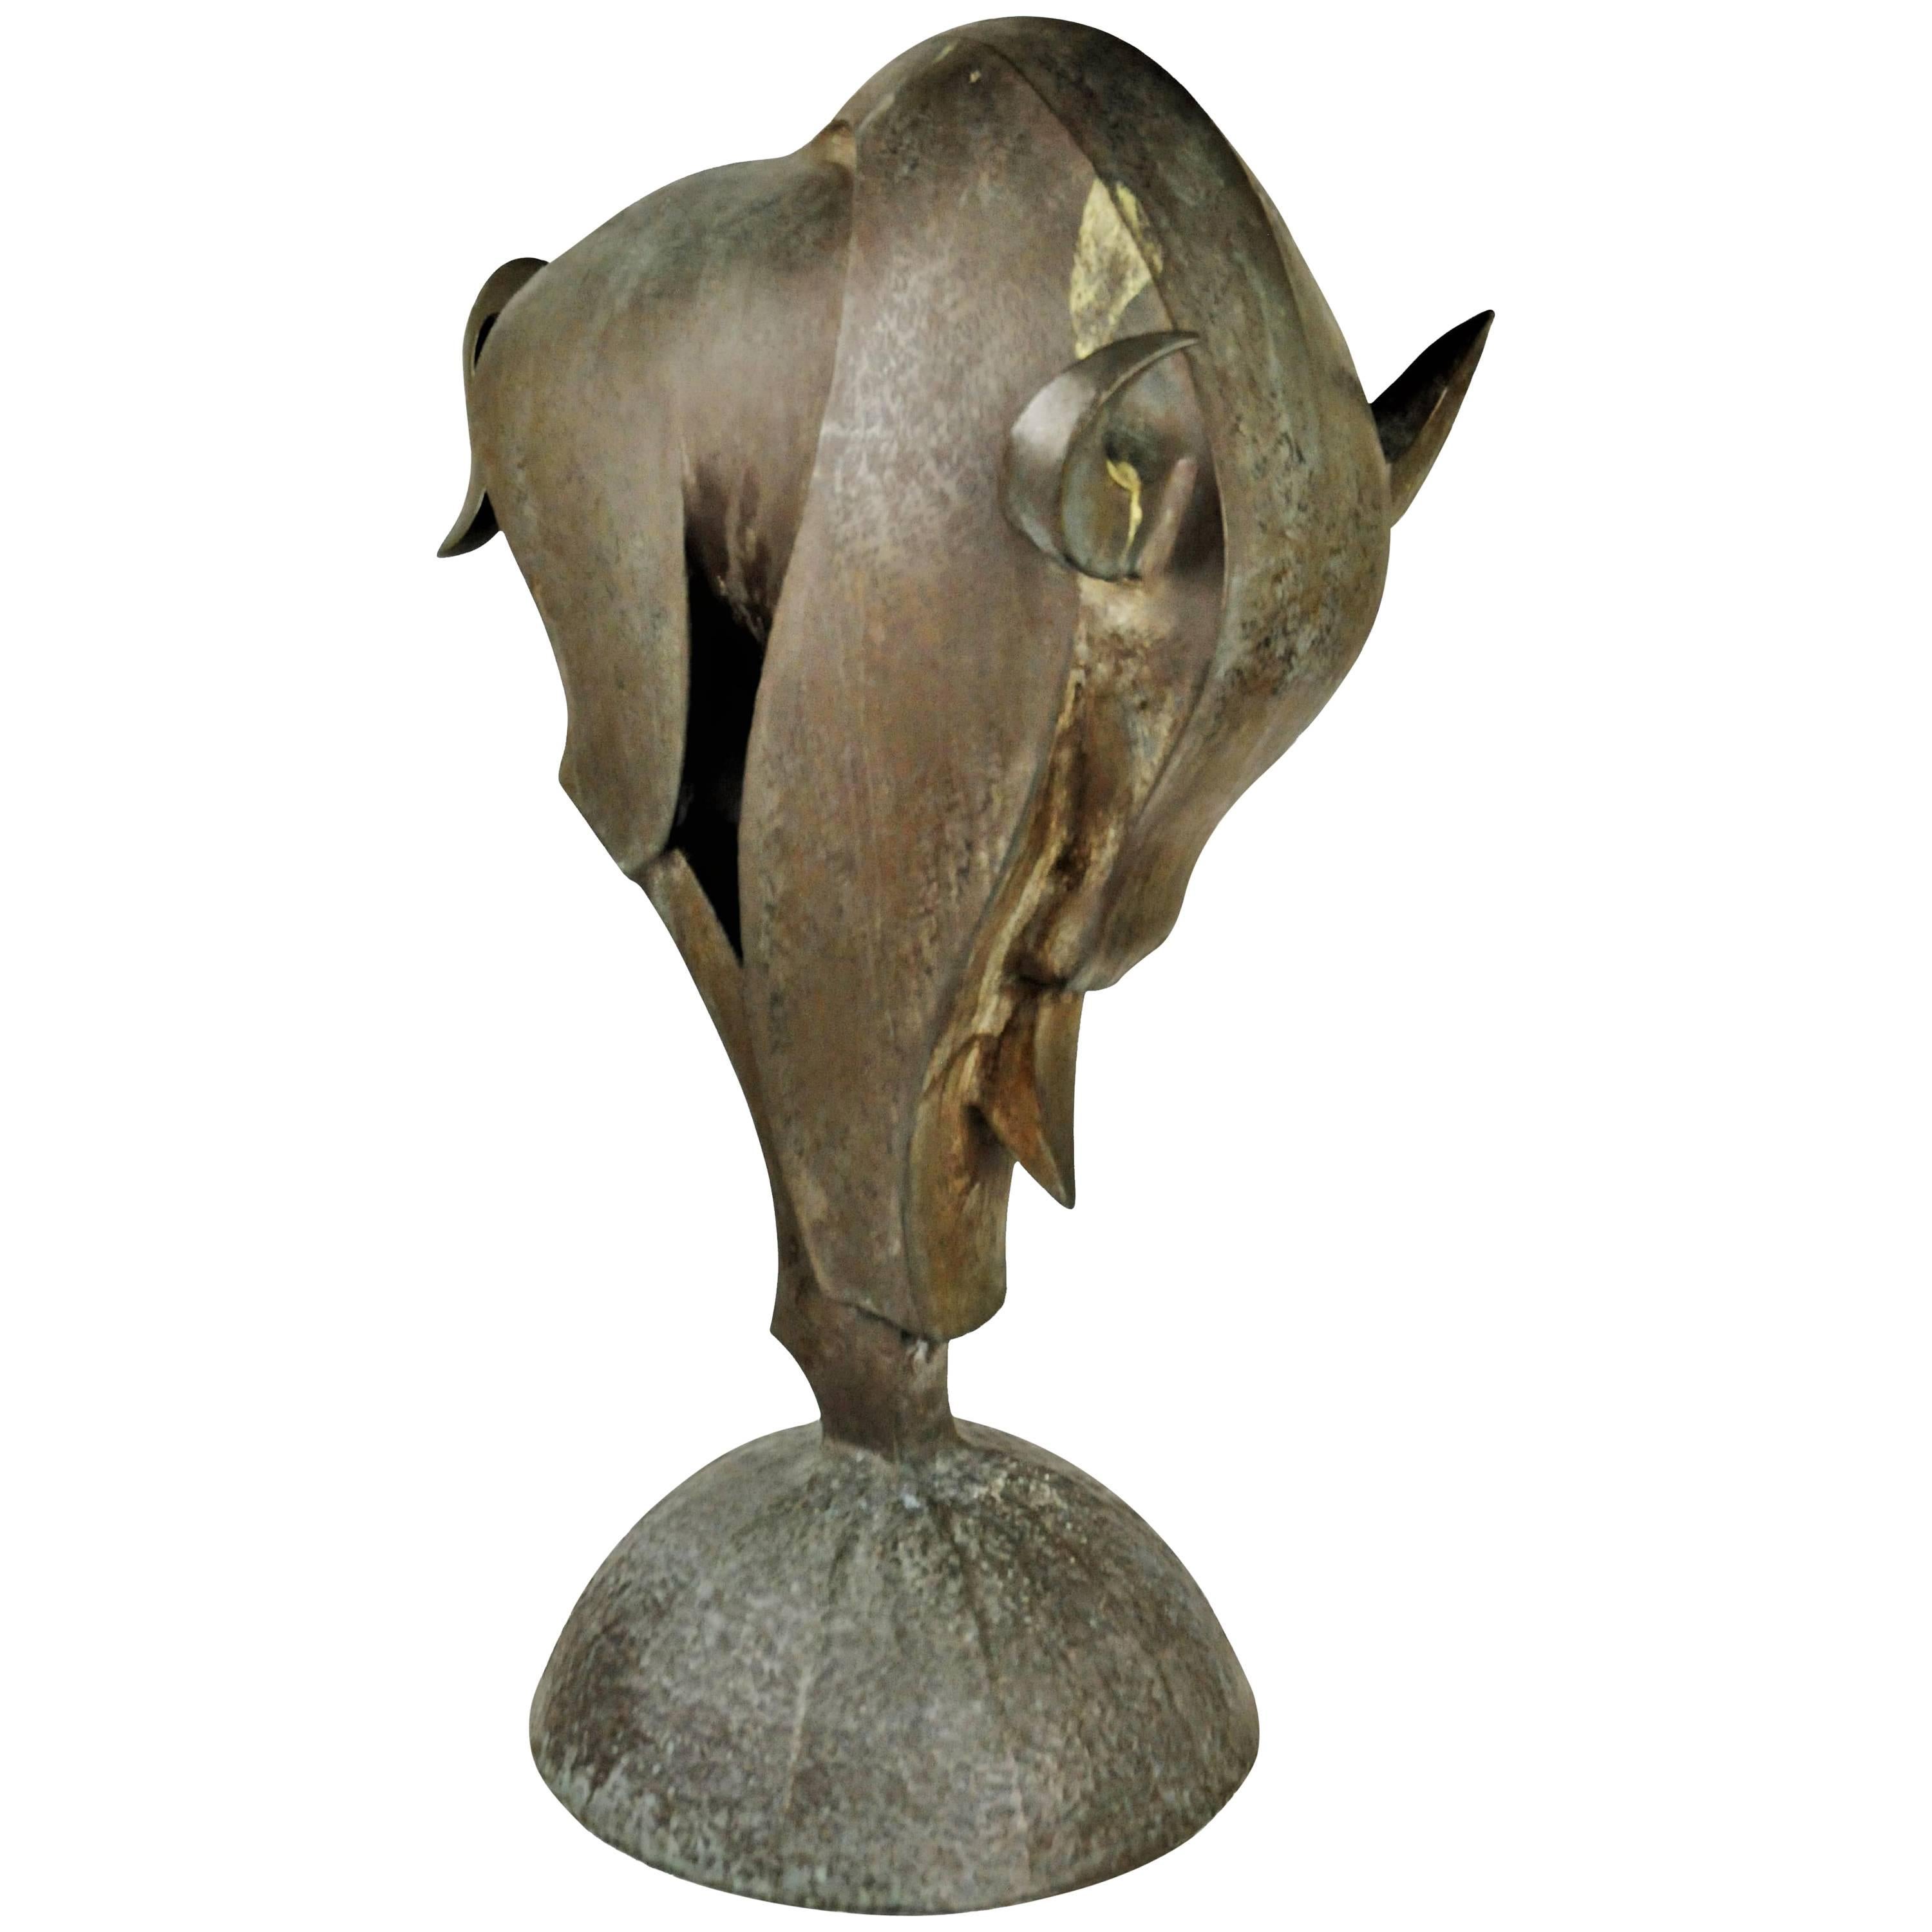 Modernisme scandinave, taureau, sculpture en bronze anodisé, 1974